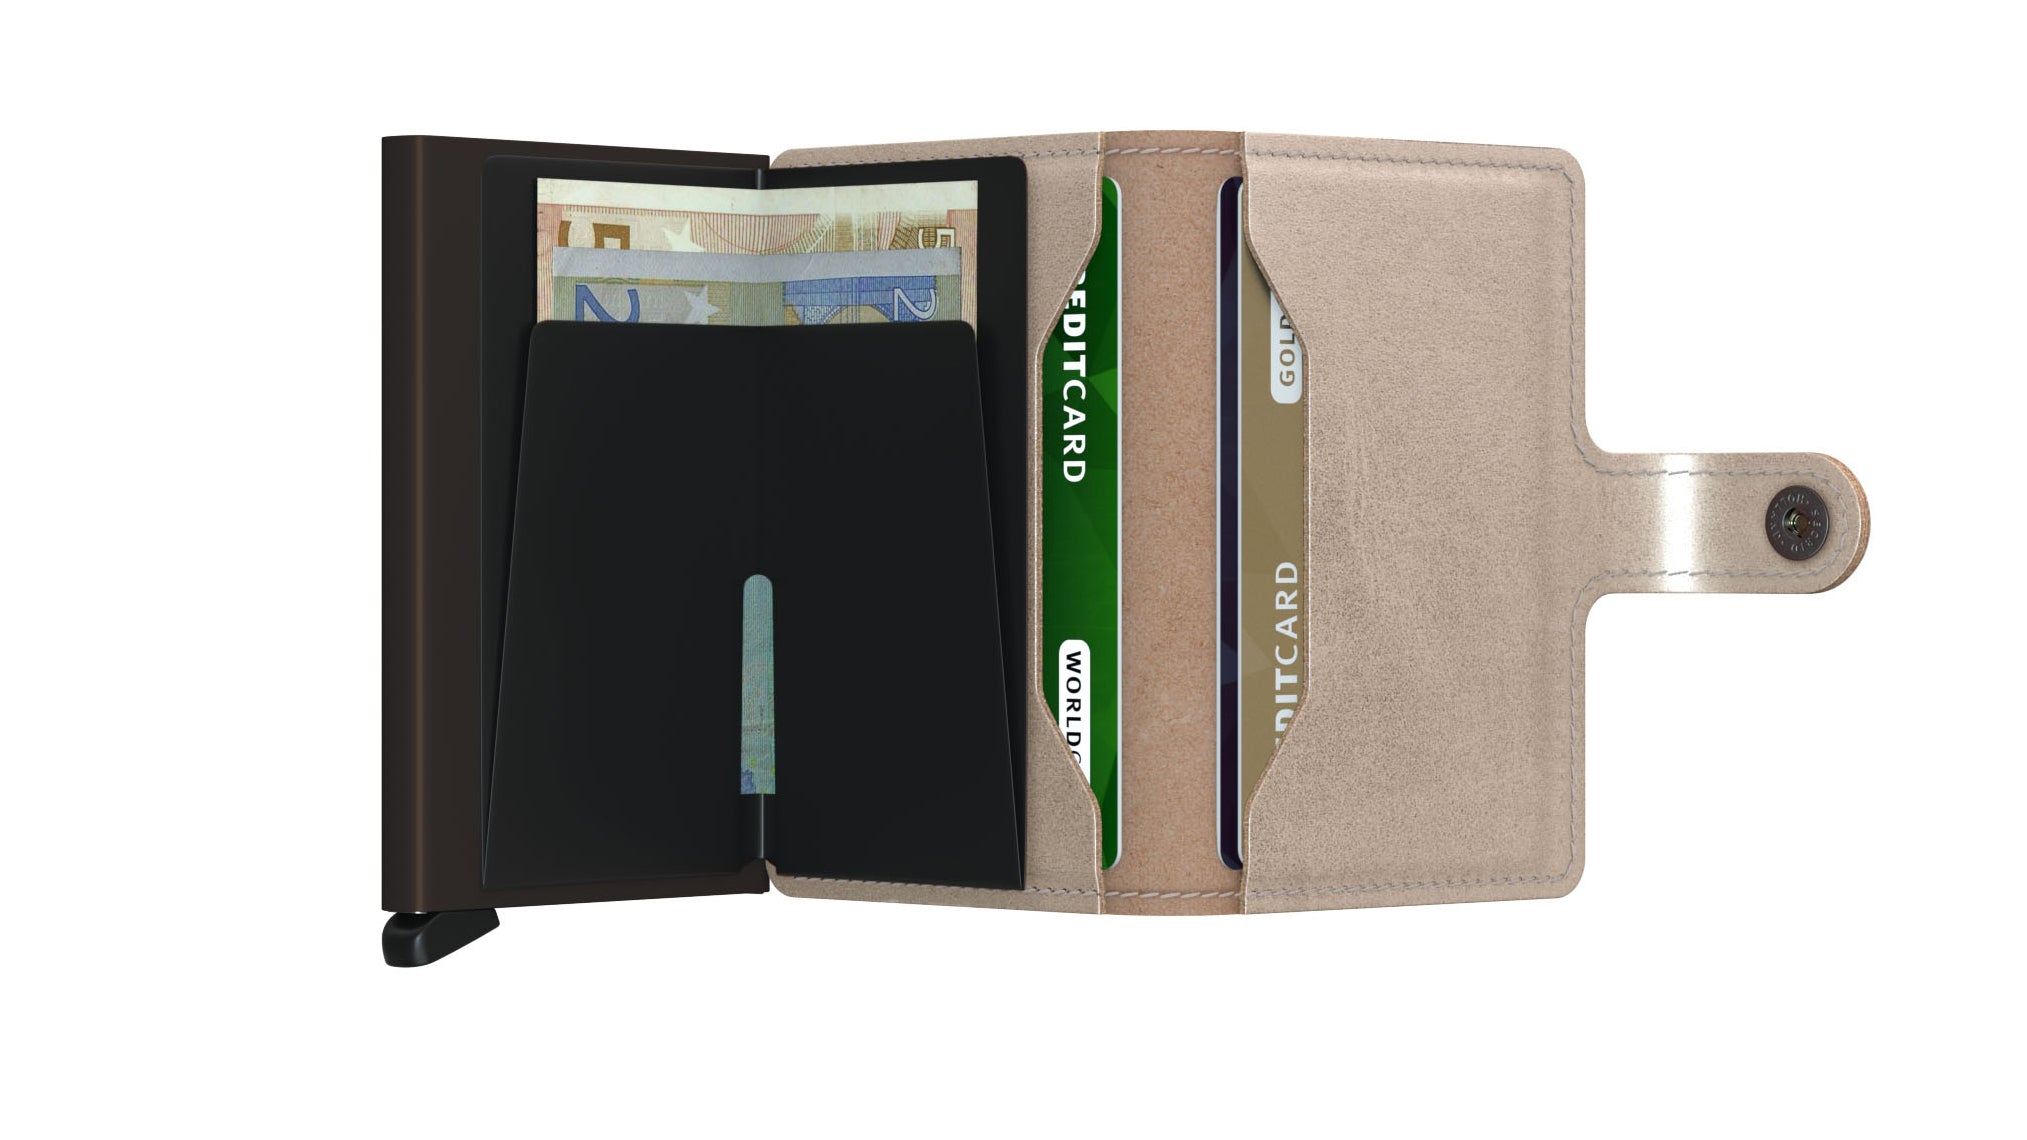 Secrid Miniwallet Metallic Champagne/Brown RFID Secure mini Wallet authorized dealer Leather